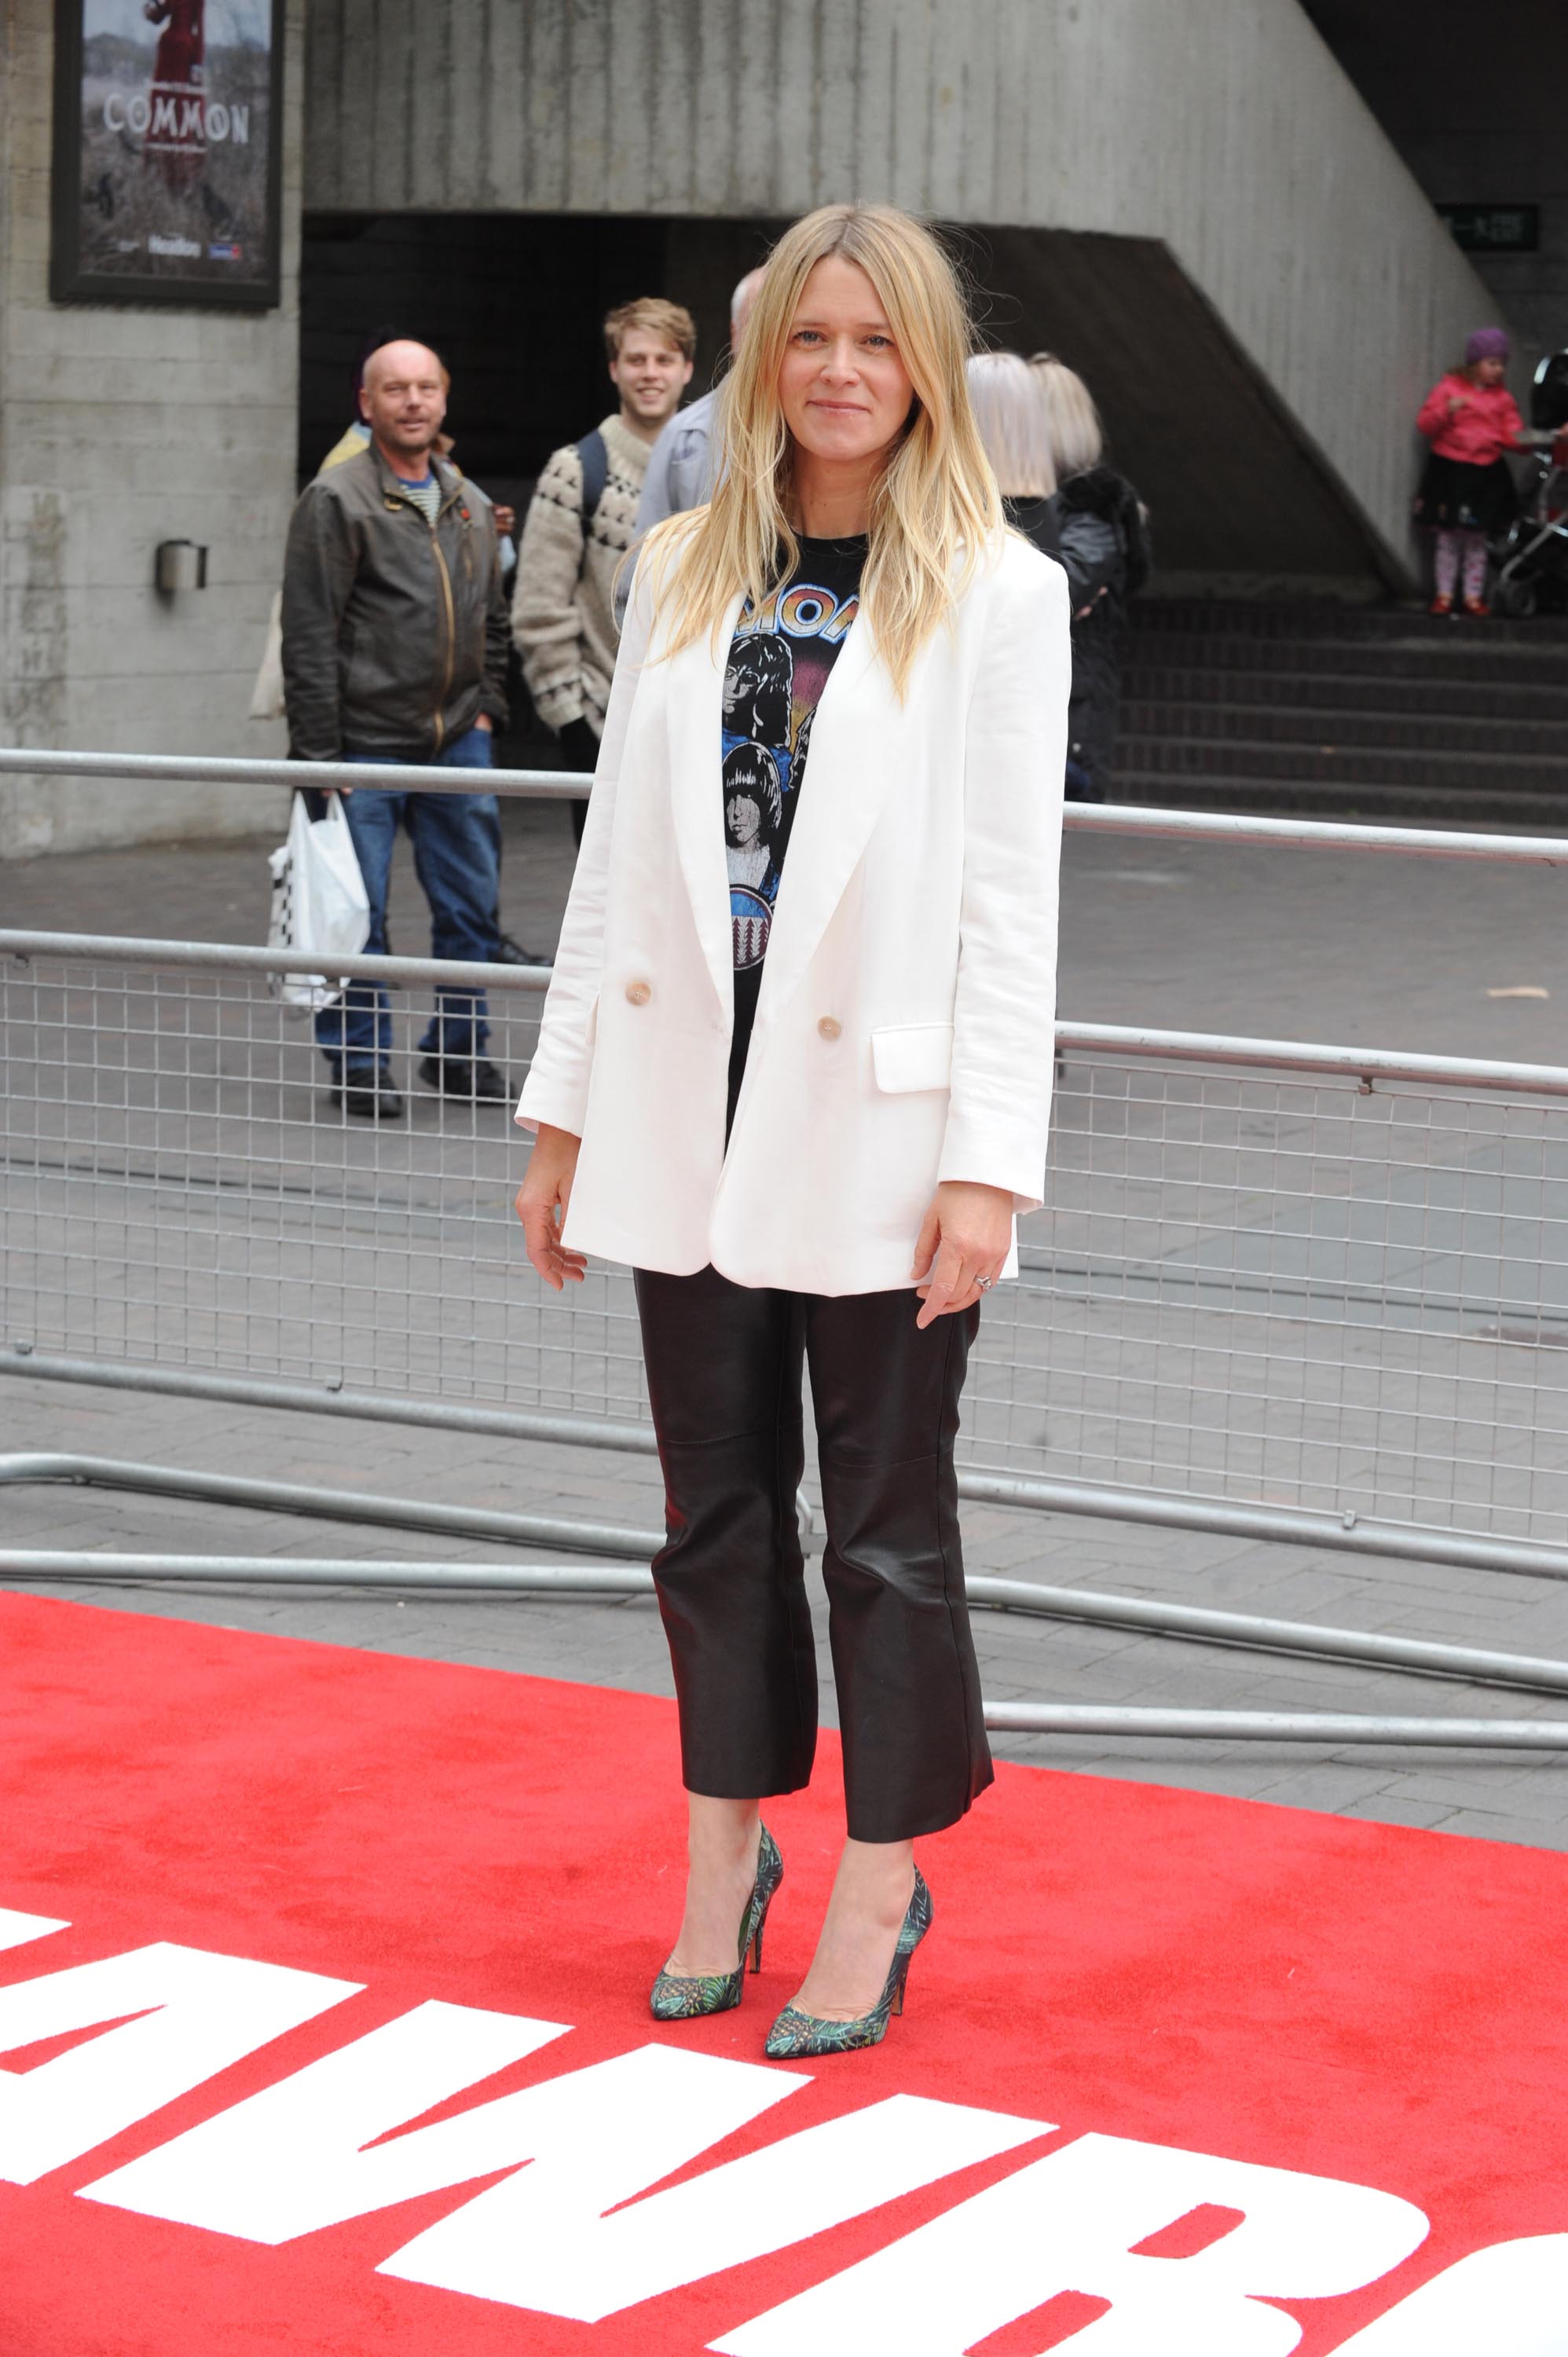 Edith Bowman attends Jawbone UK Film Premiere